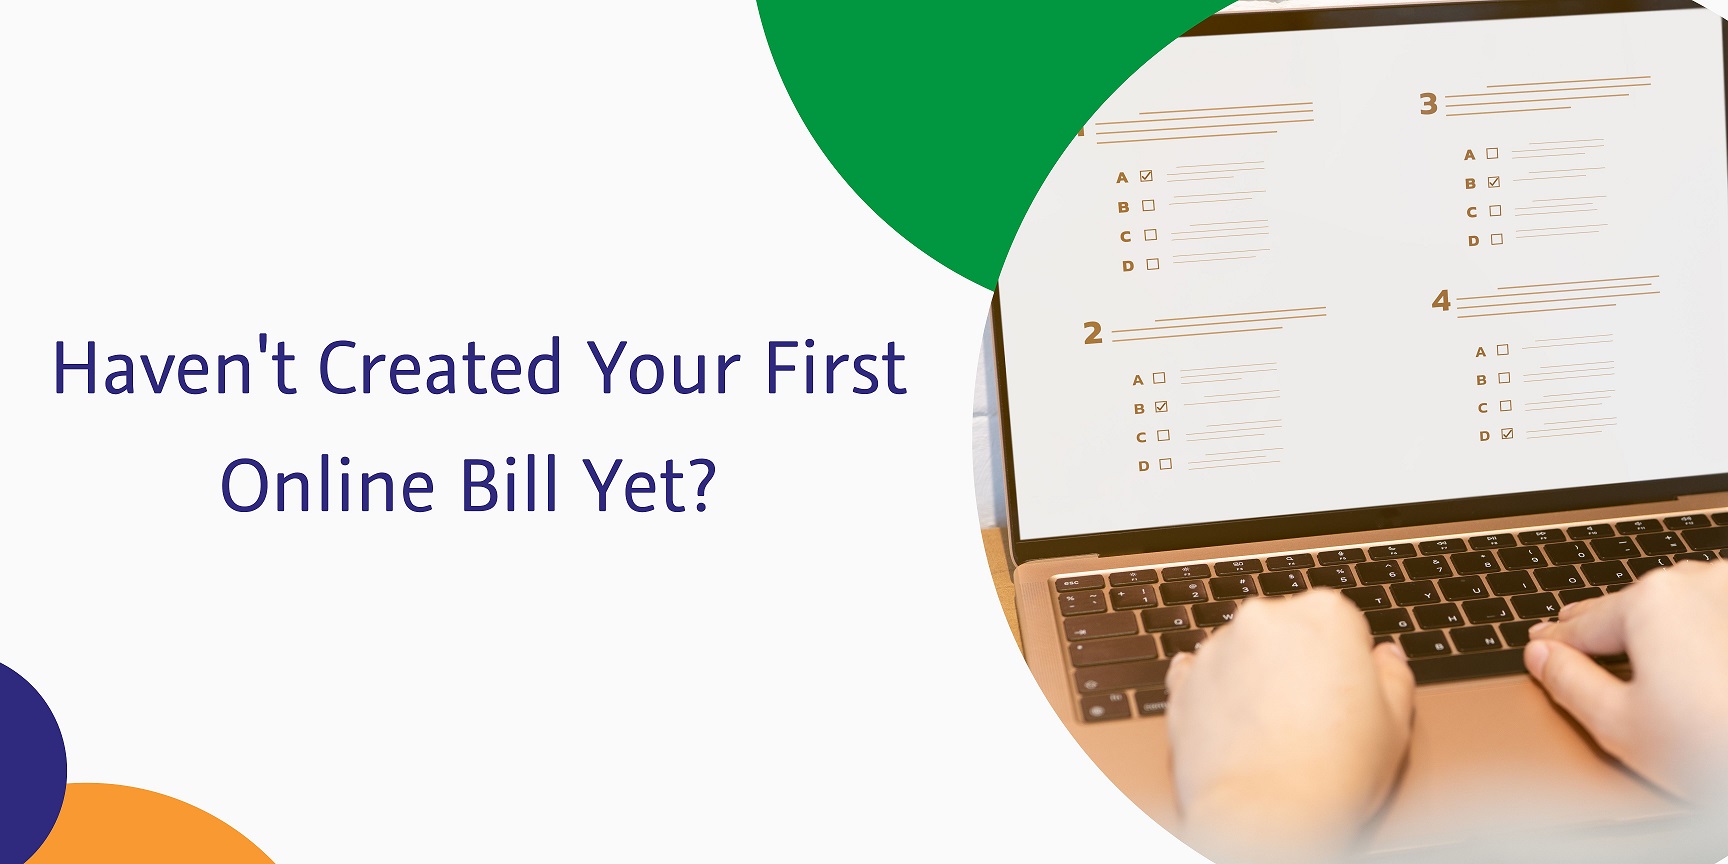 CaptainBiz: Havent Created Your First Online Bill Yet